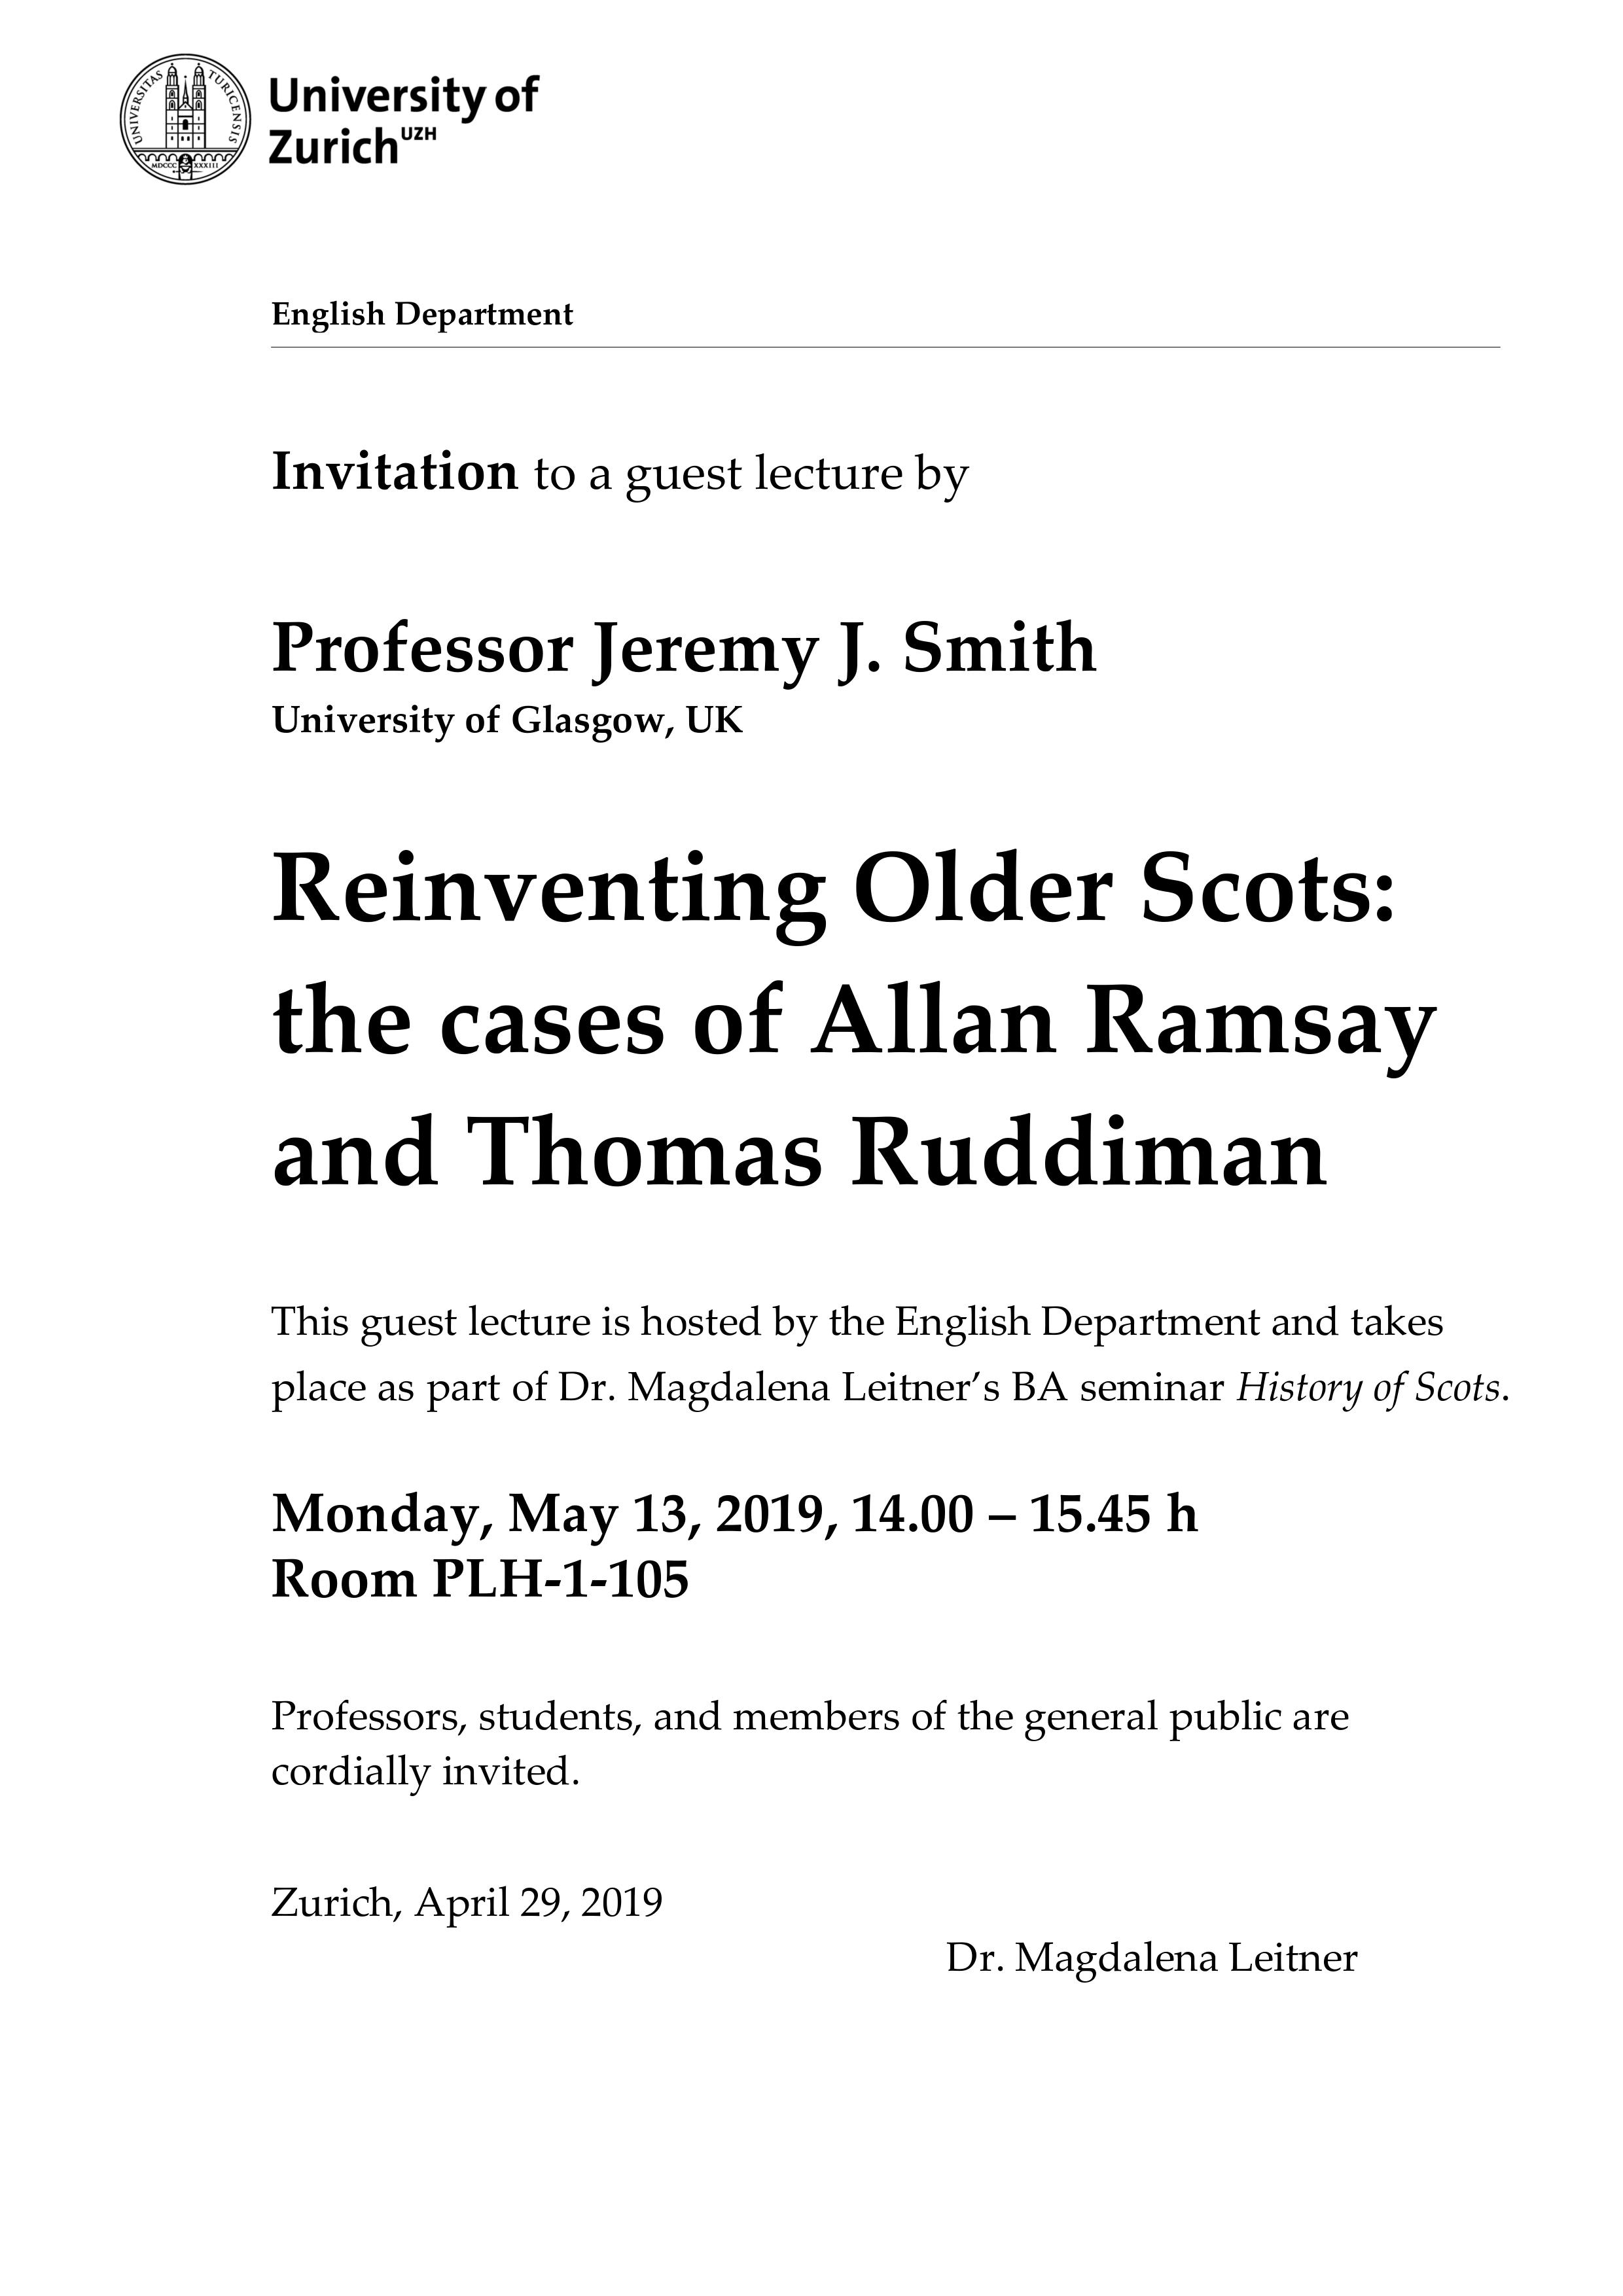 Guest Lecture Professor Jeremy J. Smith